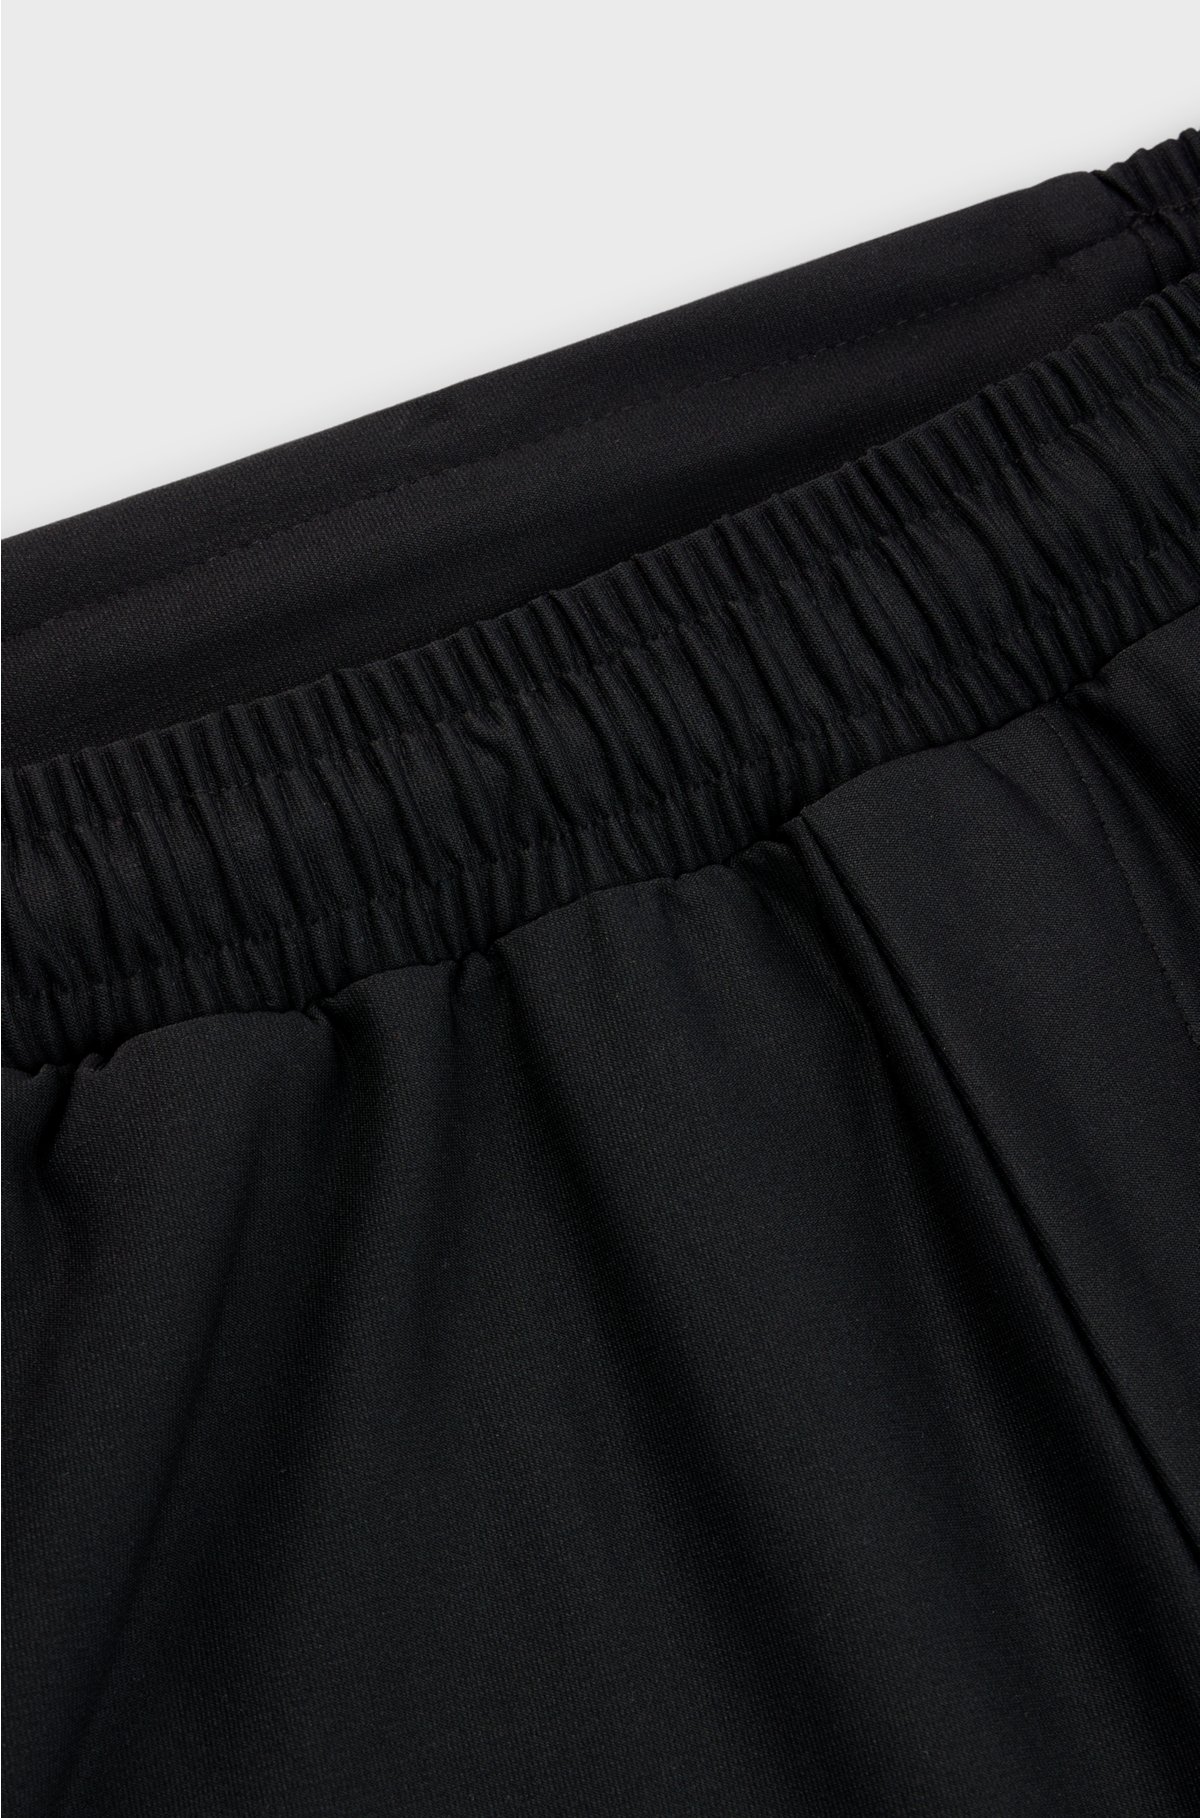 Quick-dry shorts with decorative reflective logo, Black